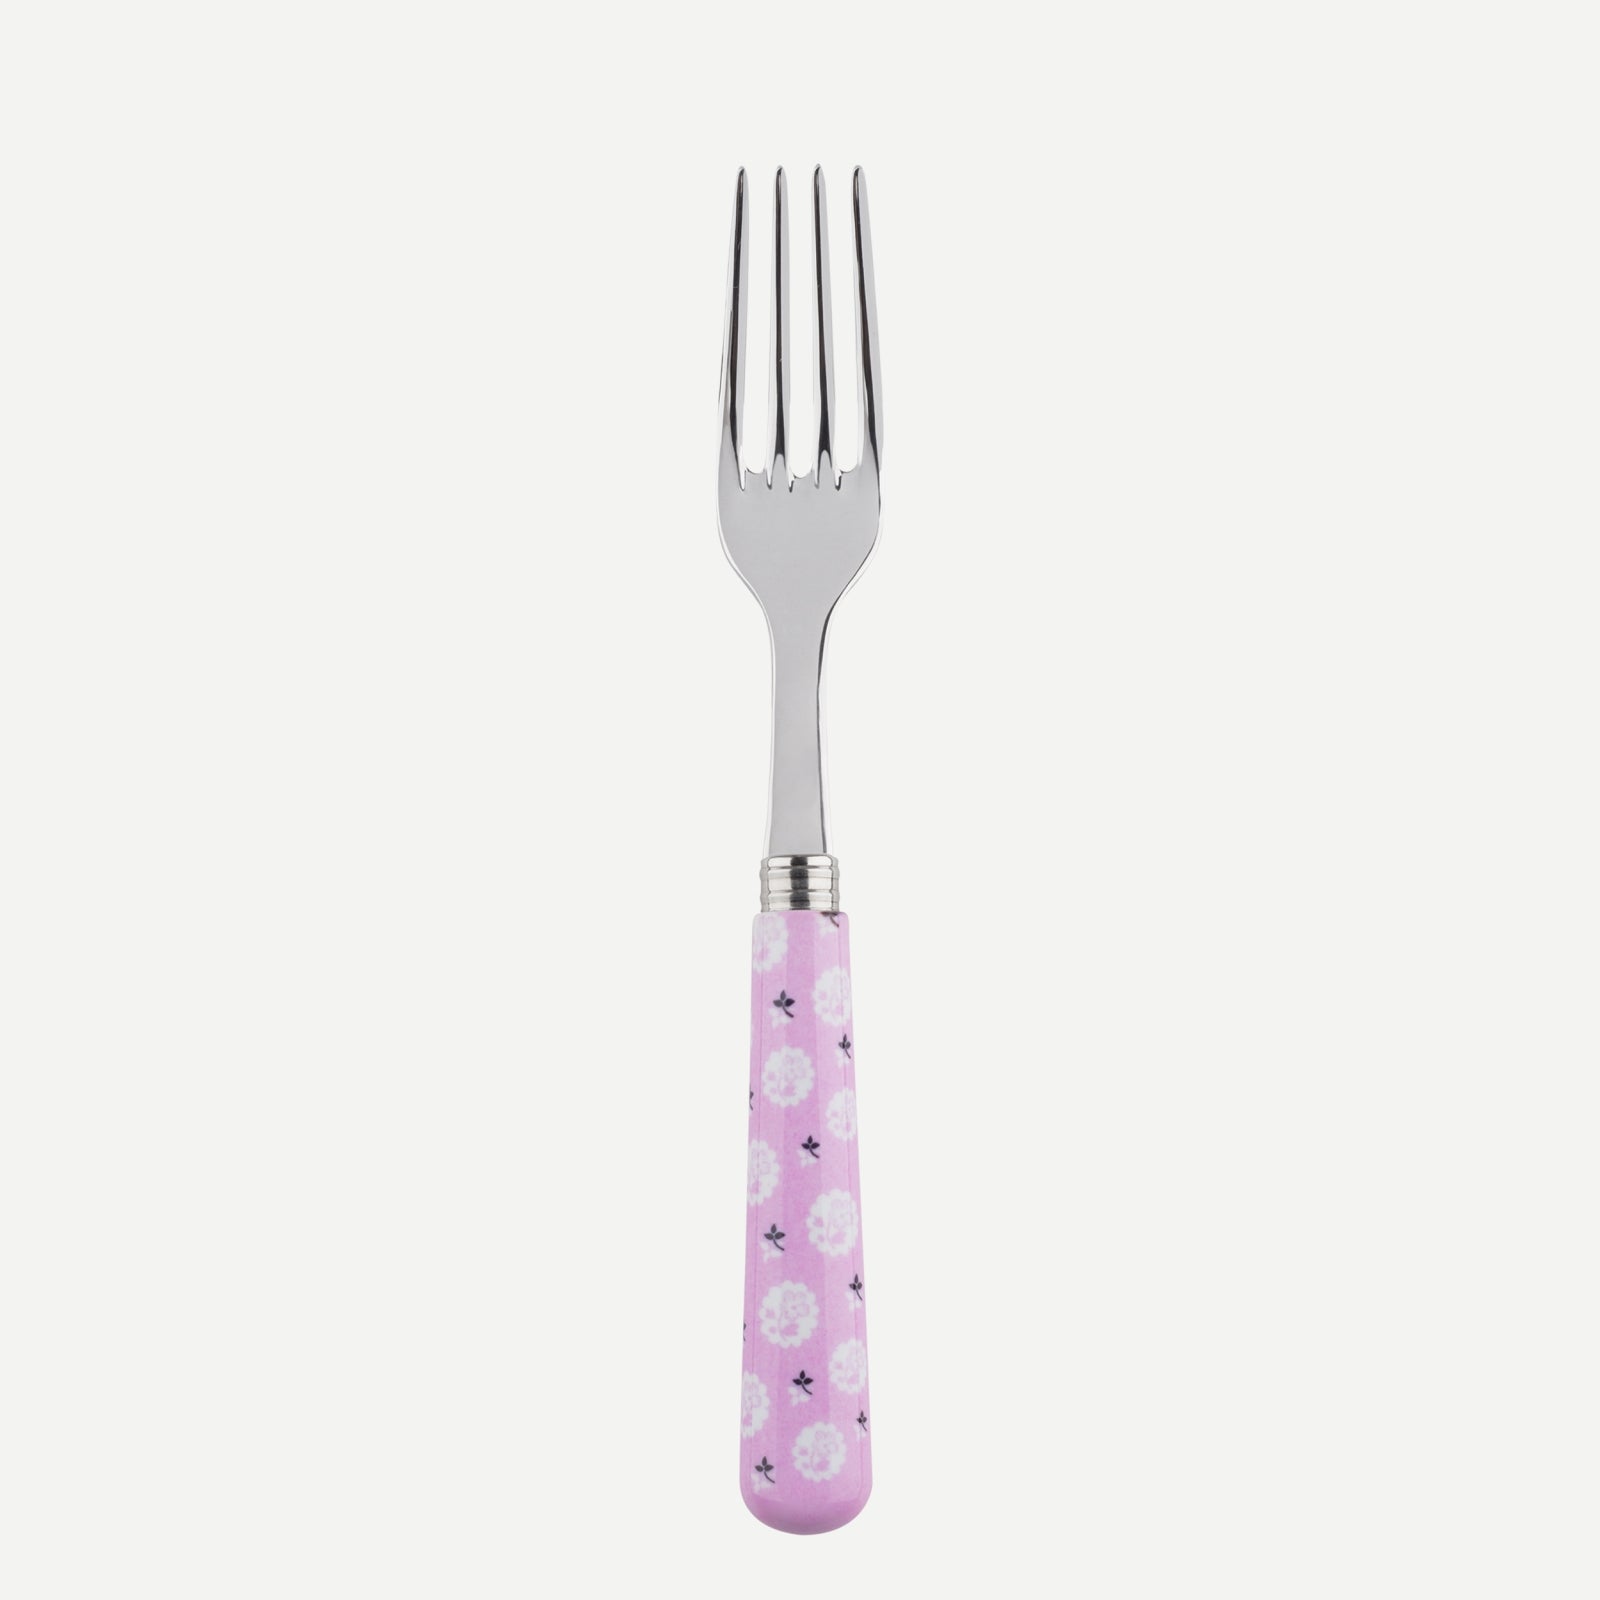 Dinner fork - Provencal - Pink